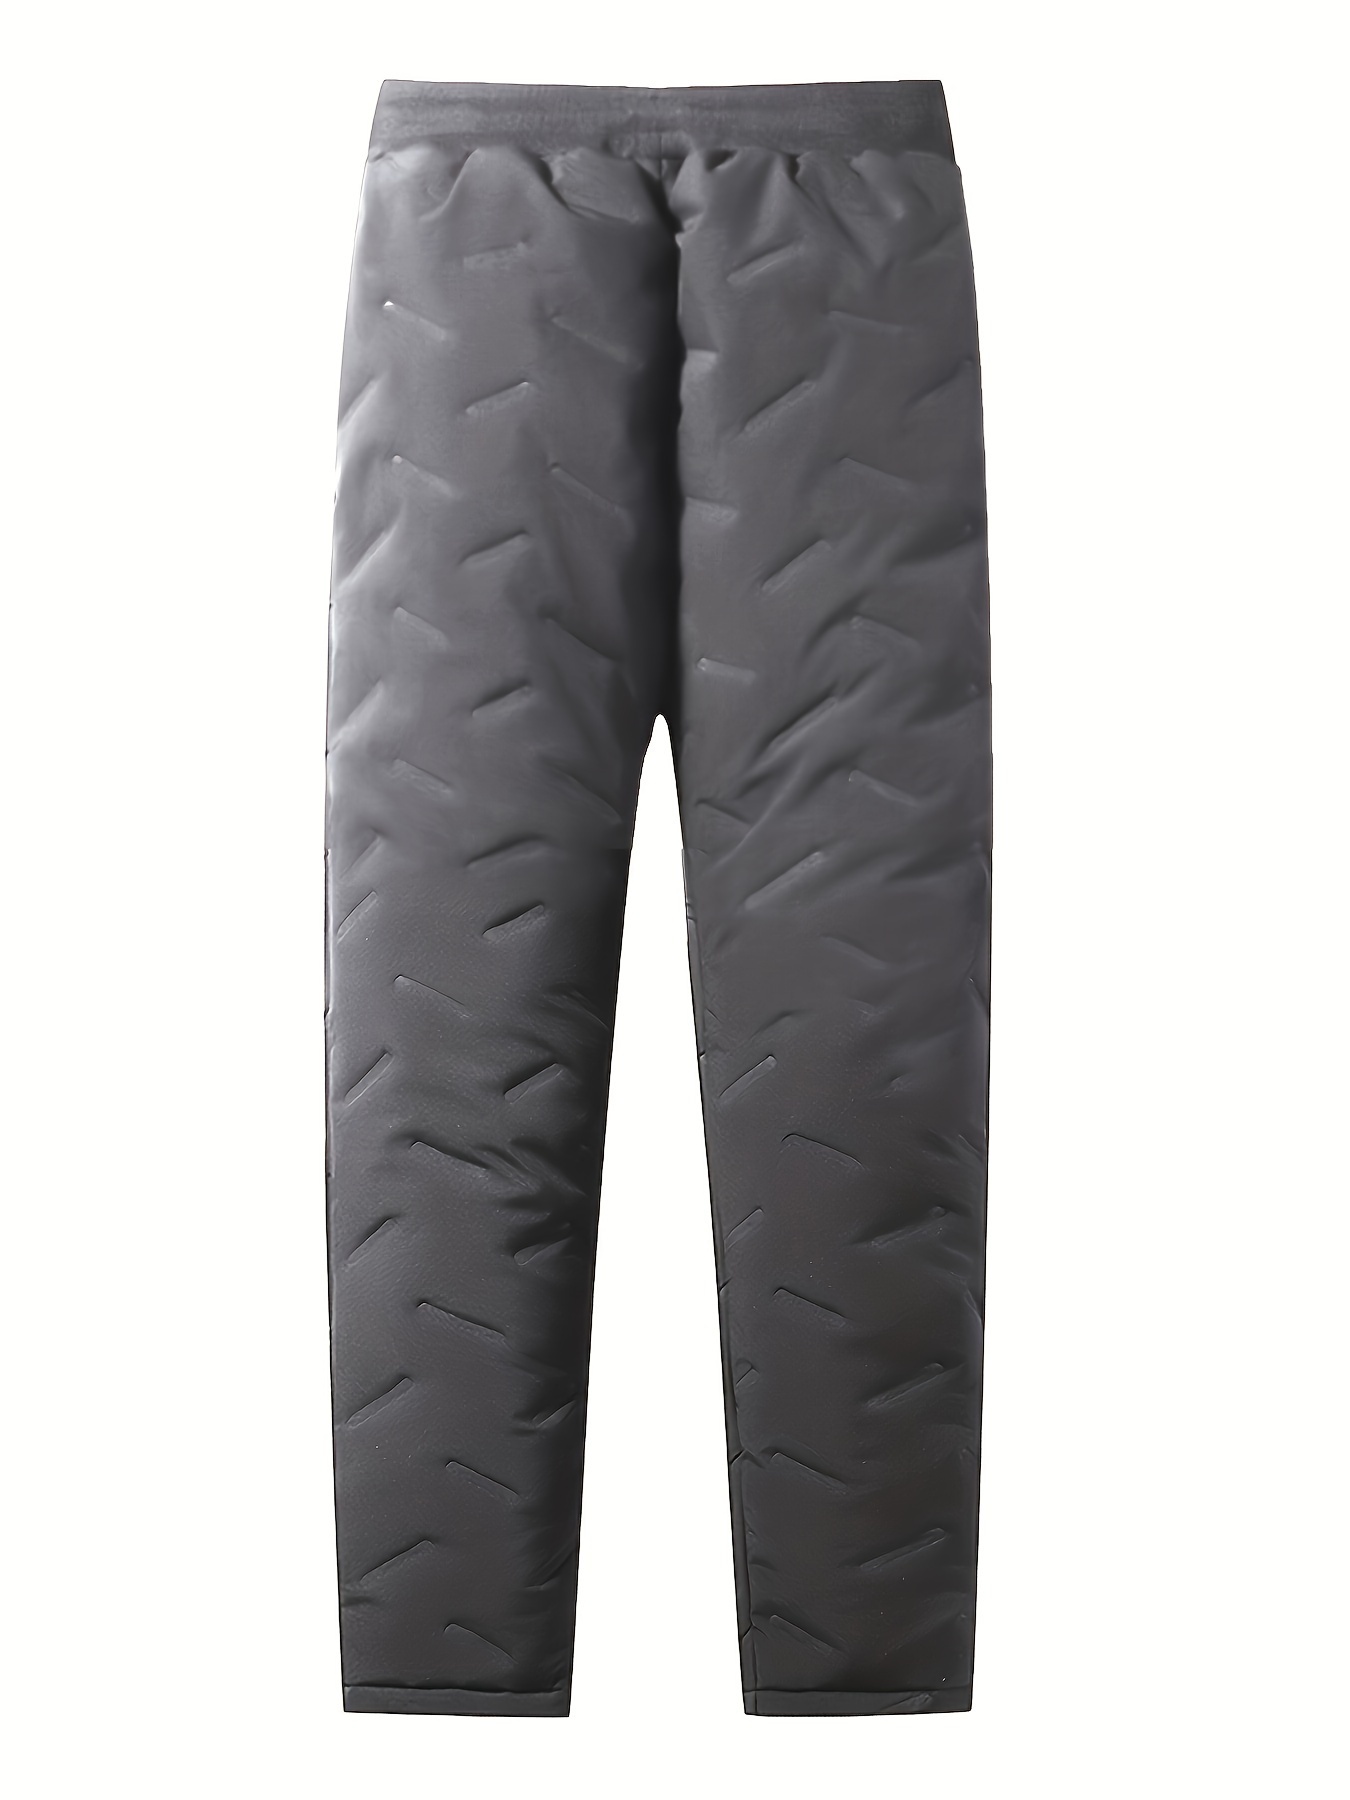 kkboxly Men's Winter Warm Fleece Lined Pants Outdoor Sports